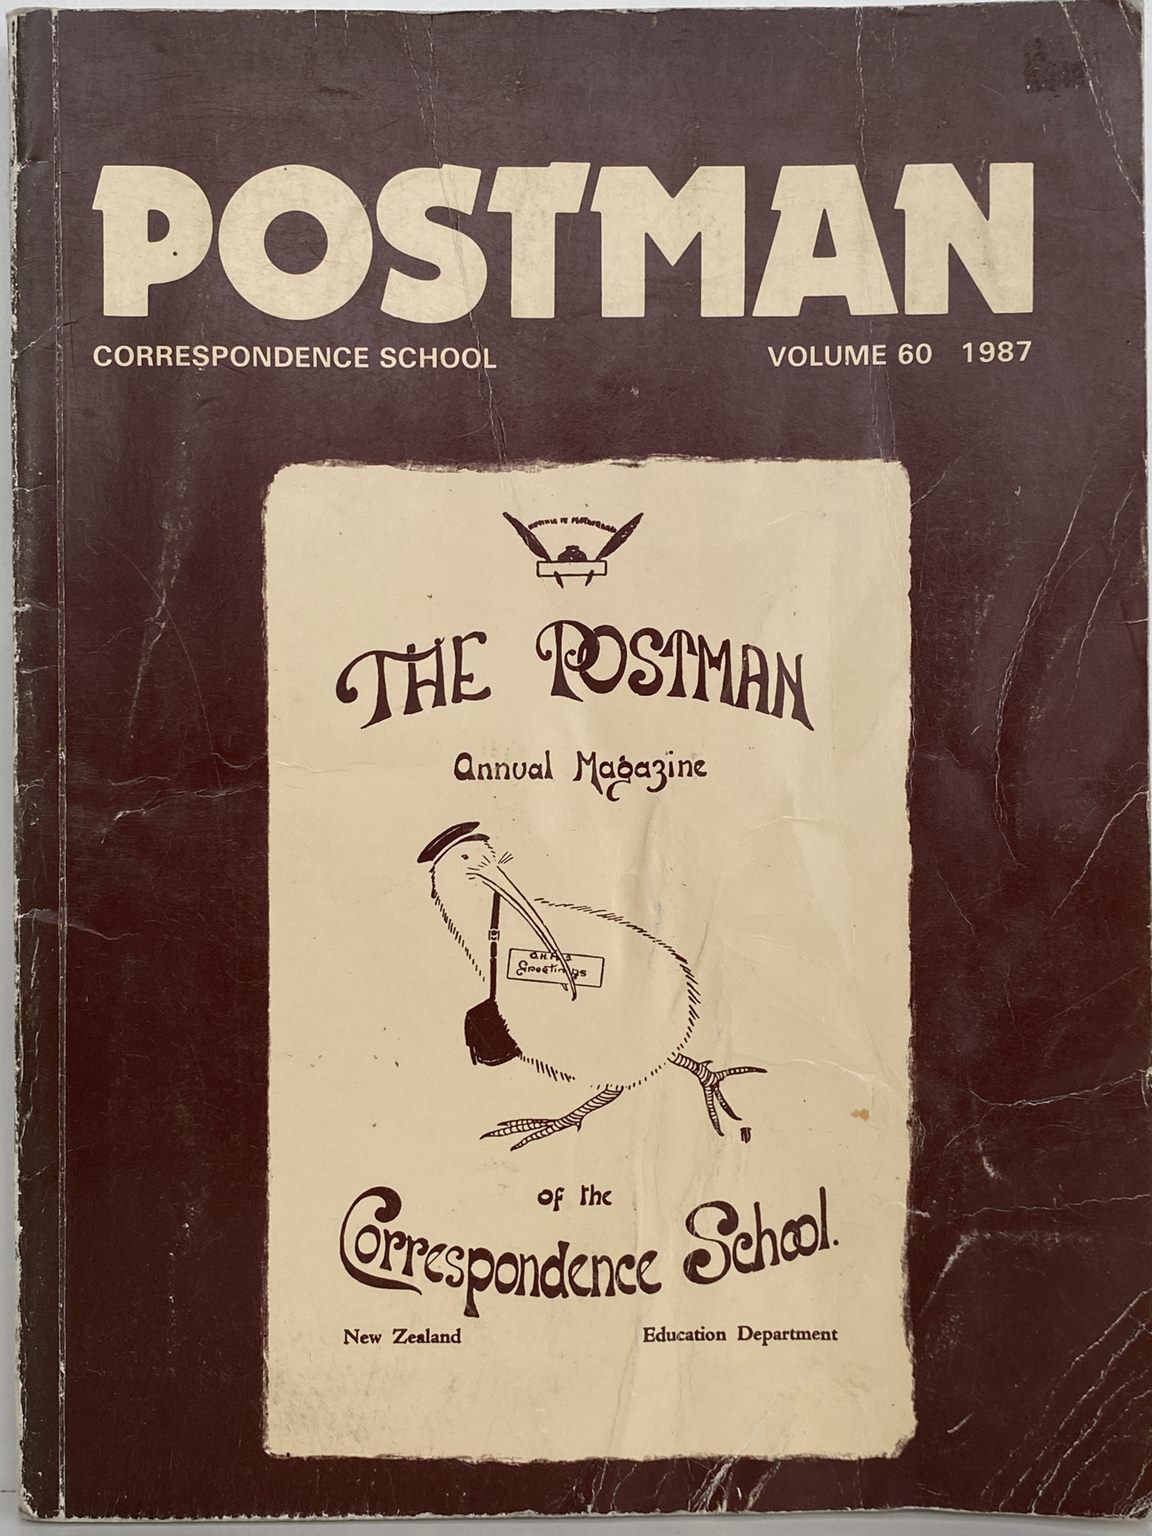 POSTMAN: Correspondence School - Volume 60